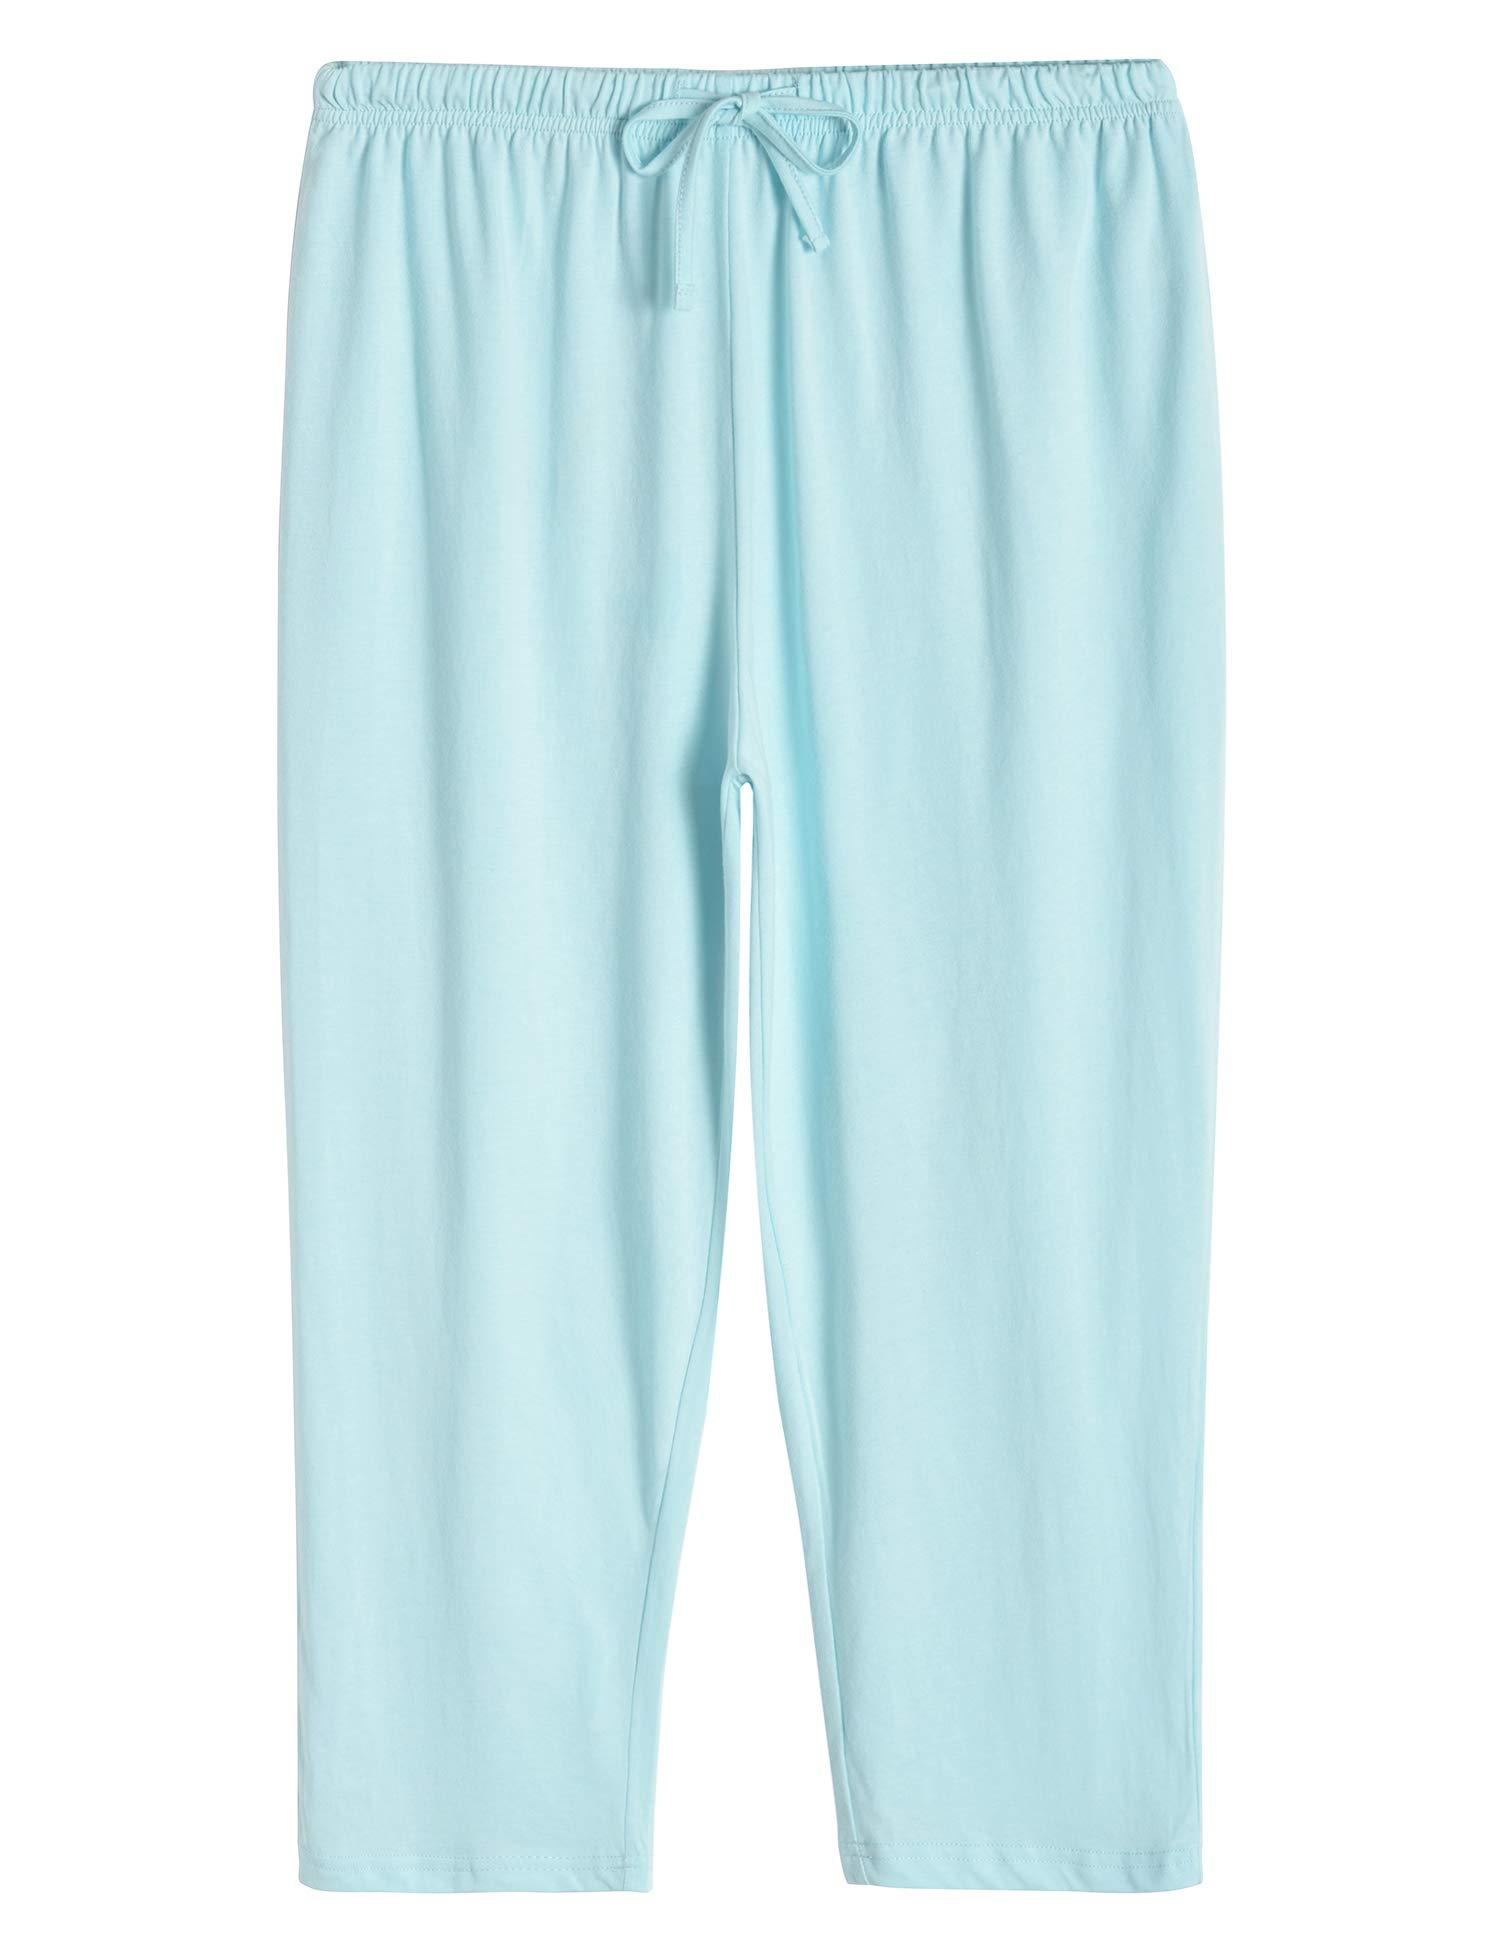 Womens Capri Pajama Pants Lounge Causal Bottoms Fun Print Sleep Pants  SK001-Dragonfly-S